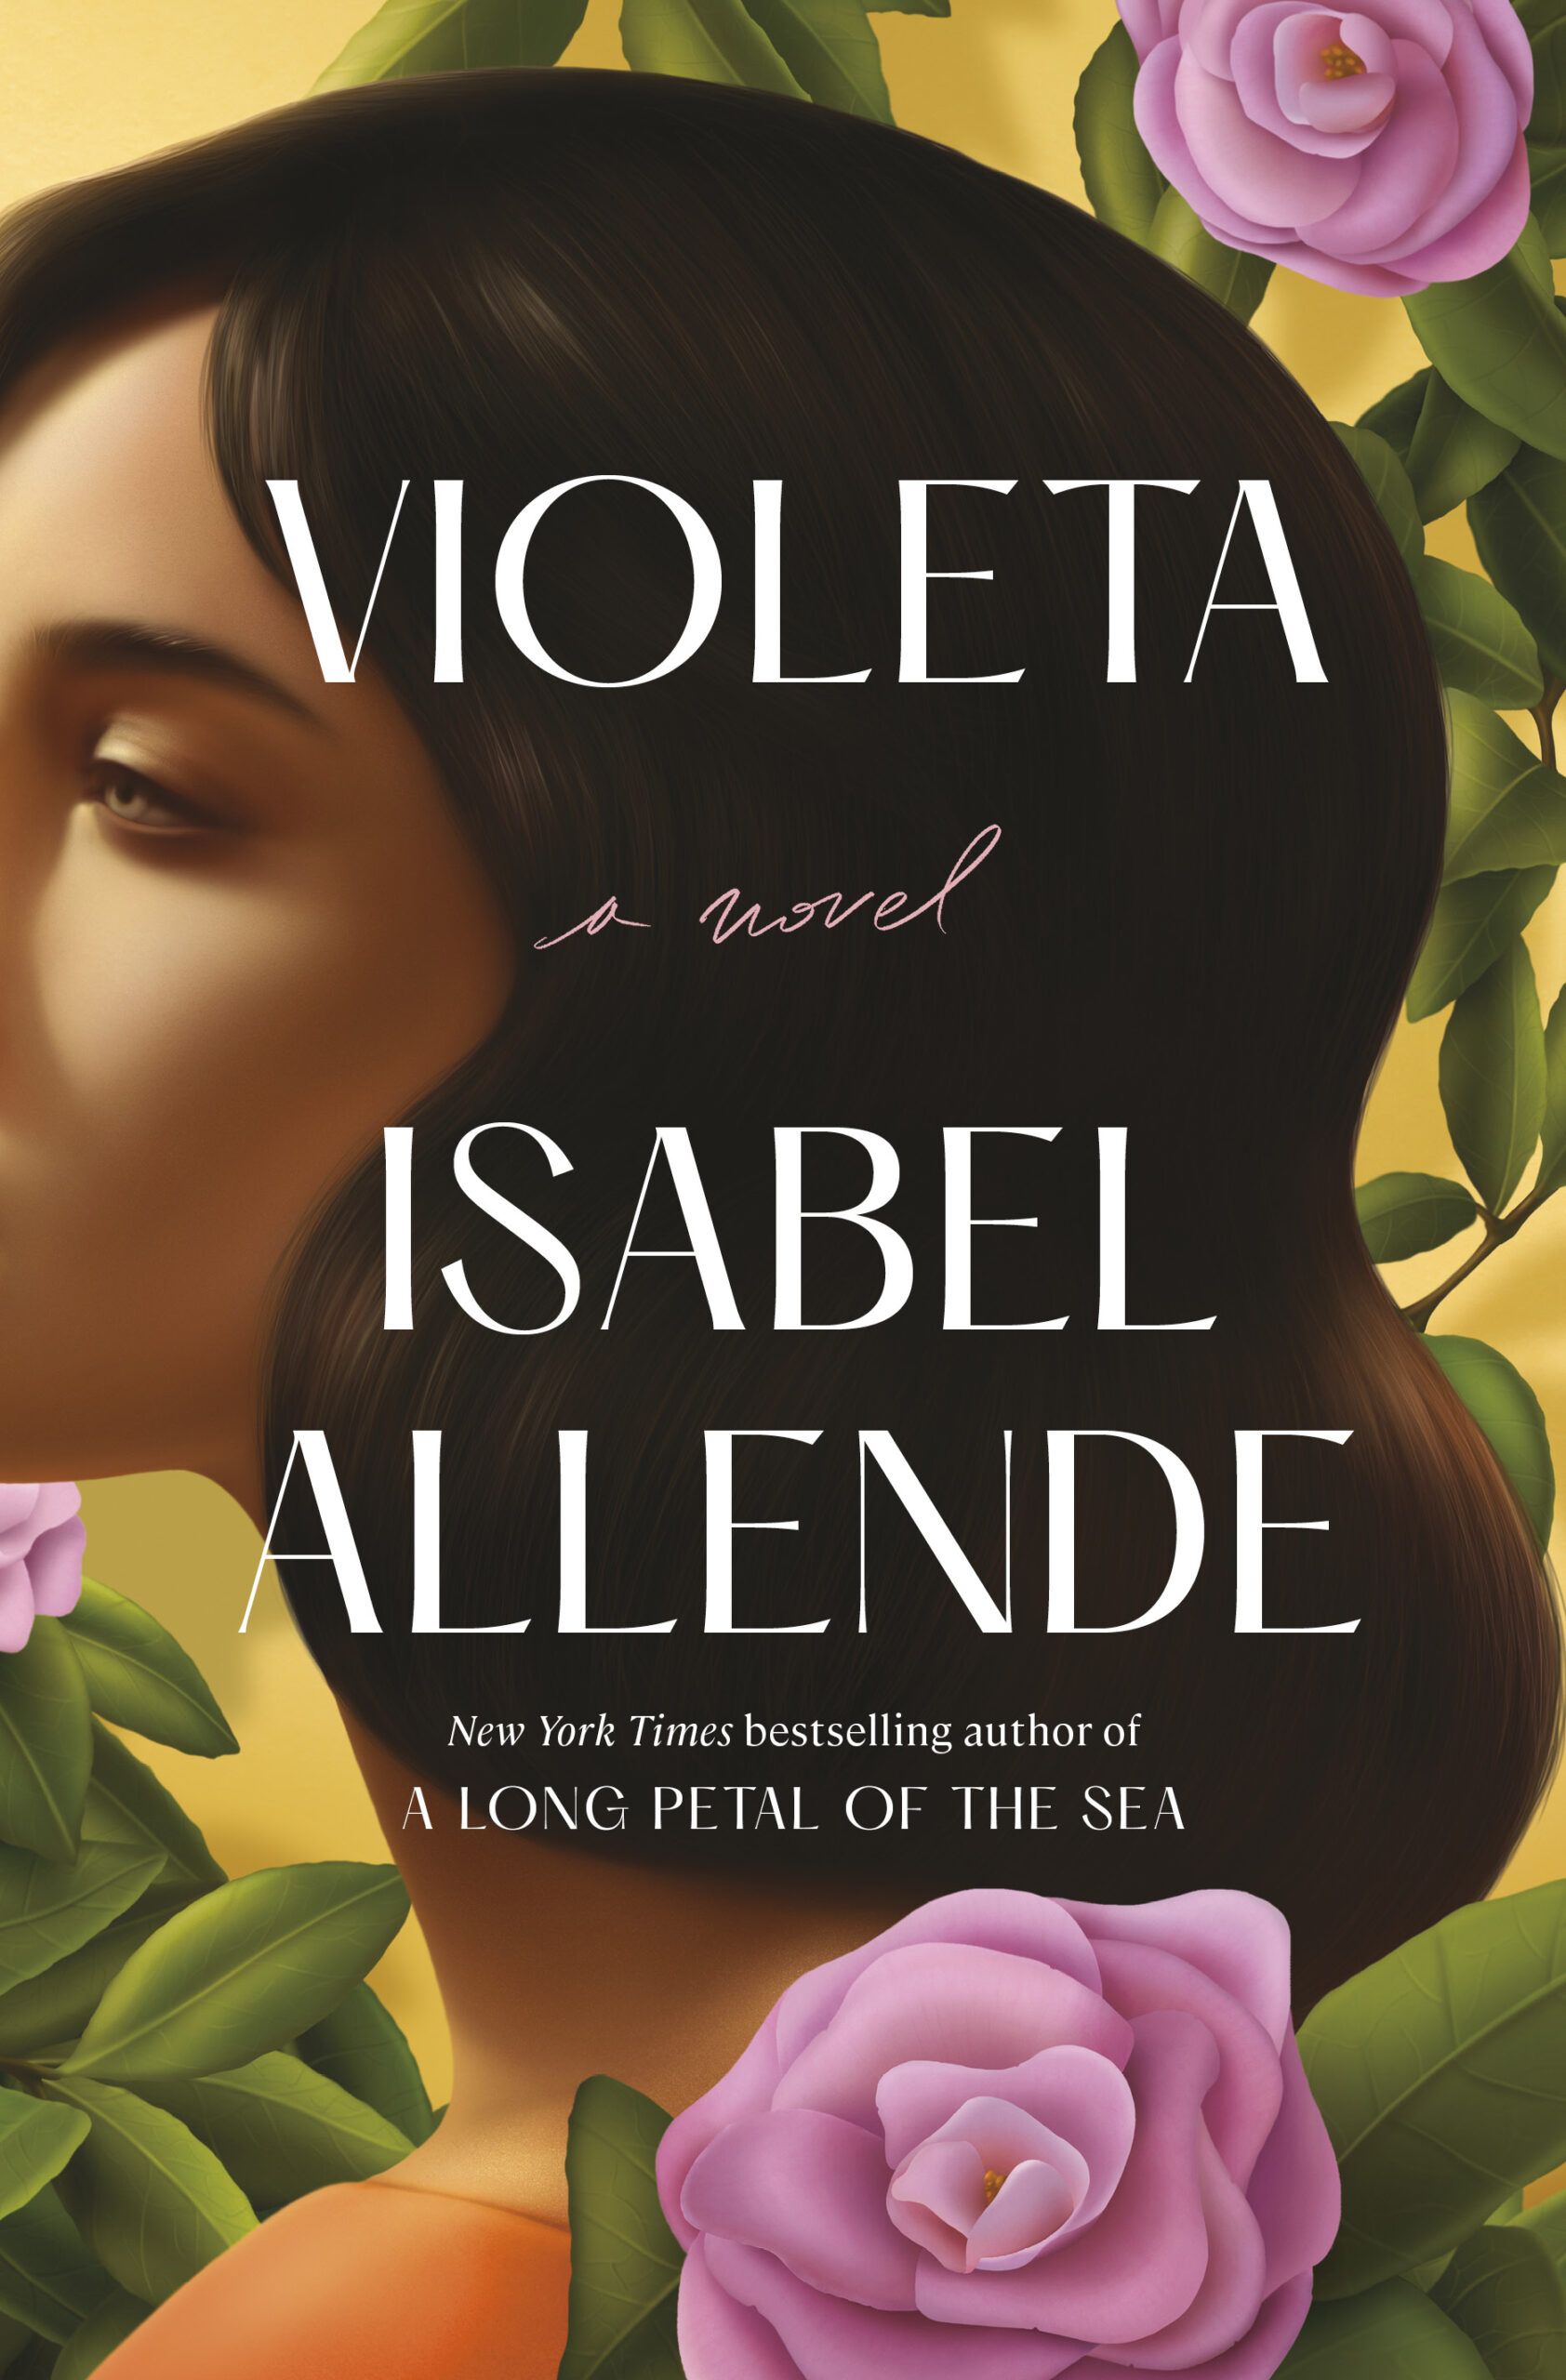 Cover image of "Violeta" by Isabel Allende.